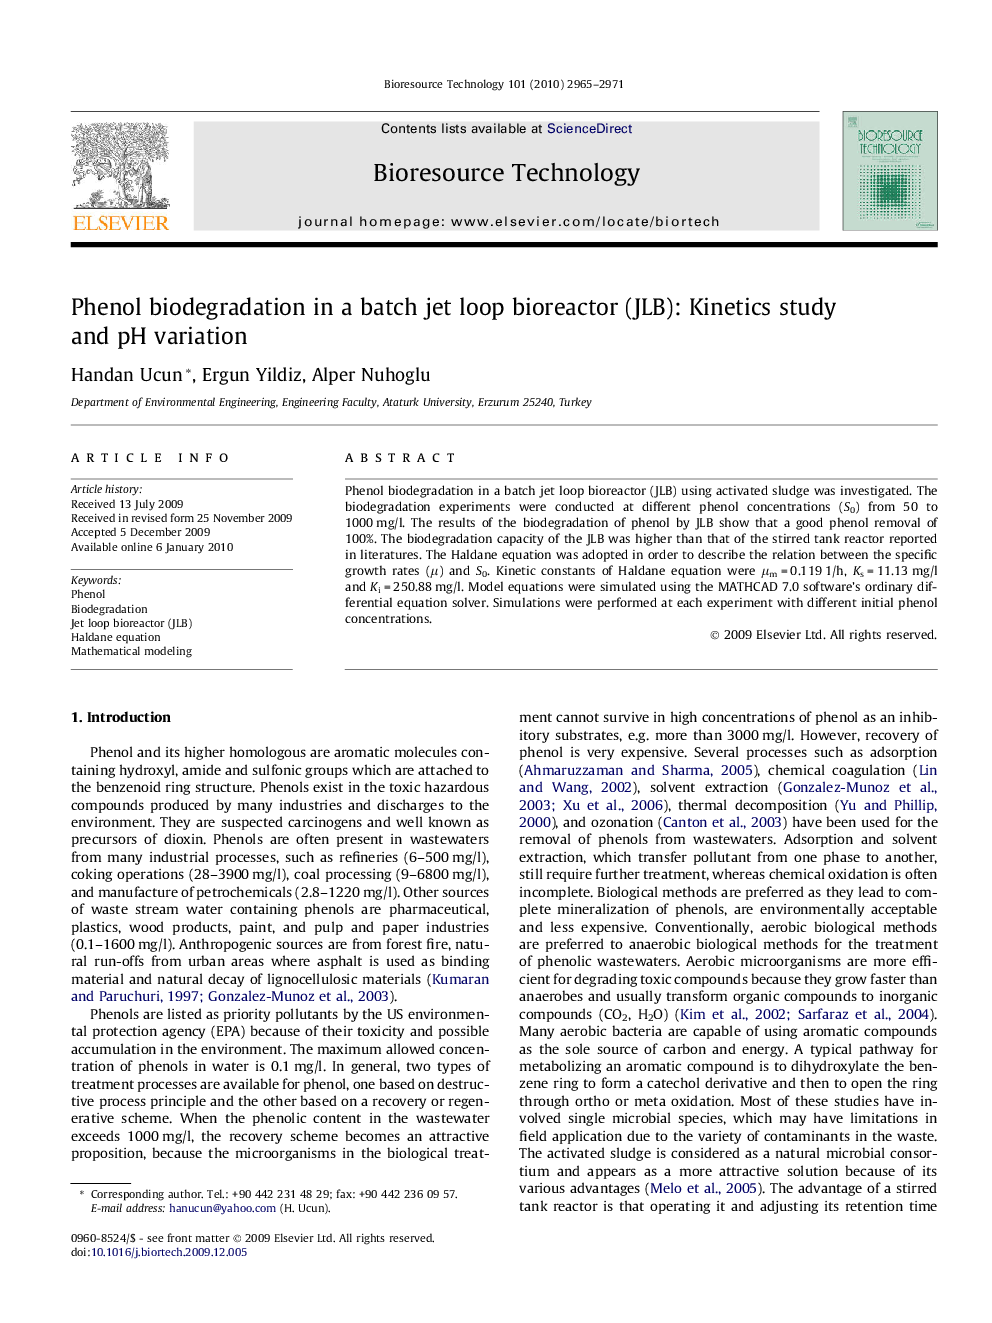 Phenol biodegradation in a batch jet loop bioreactor (JLB): Kinetics study and pH variation